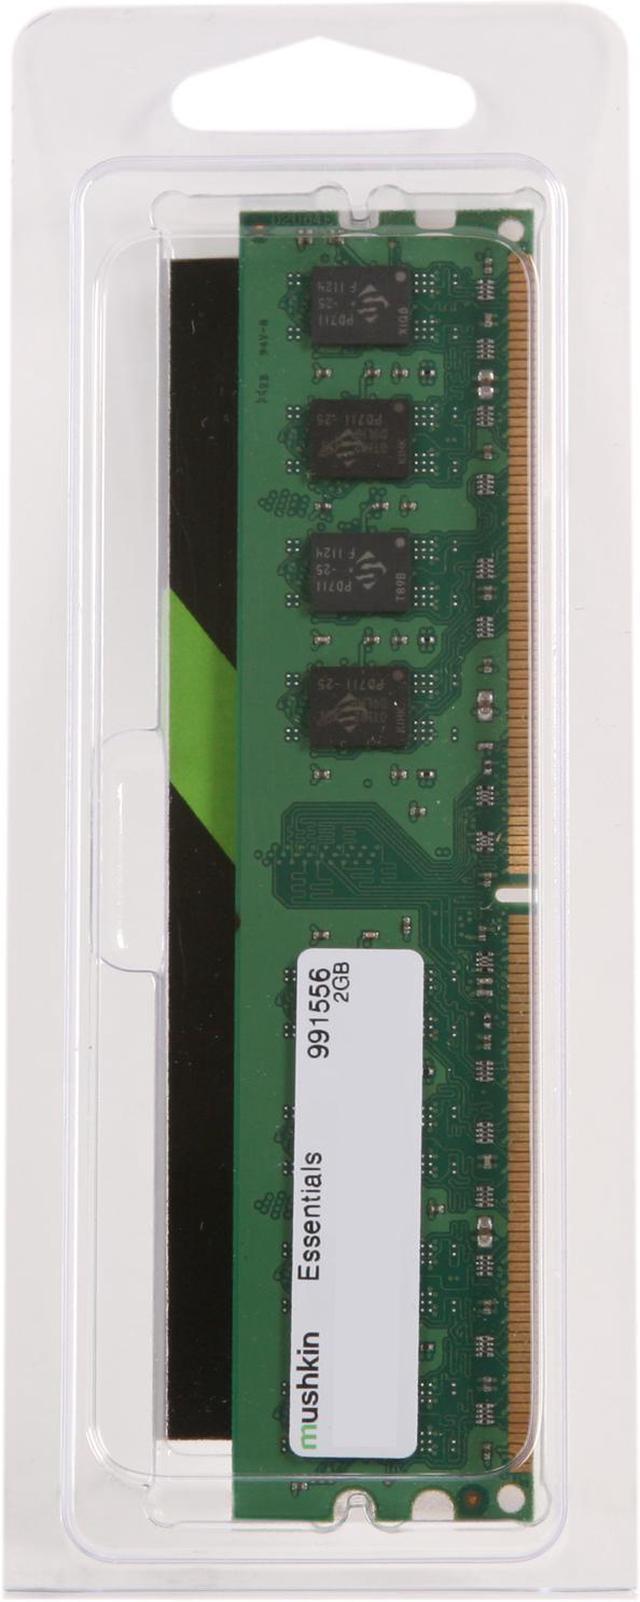 Mushkin Enhanced 2GB DDR2 667 (PC2 5300) Desktop Memory Model